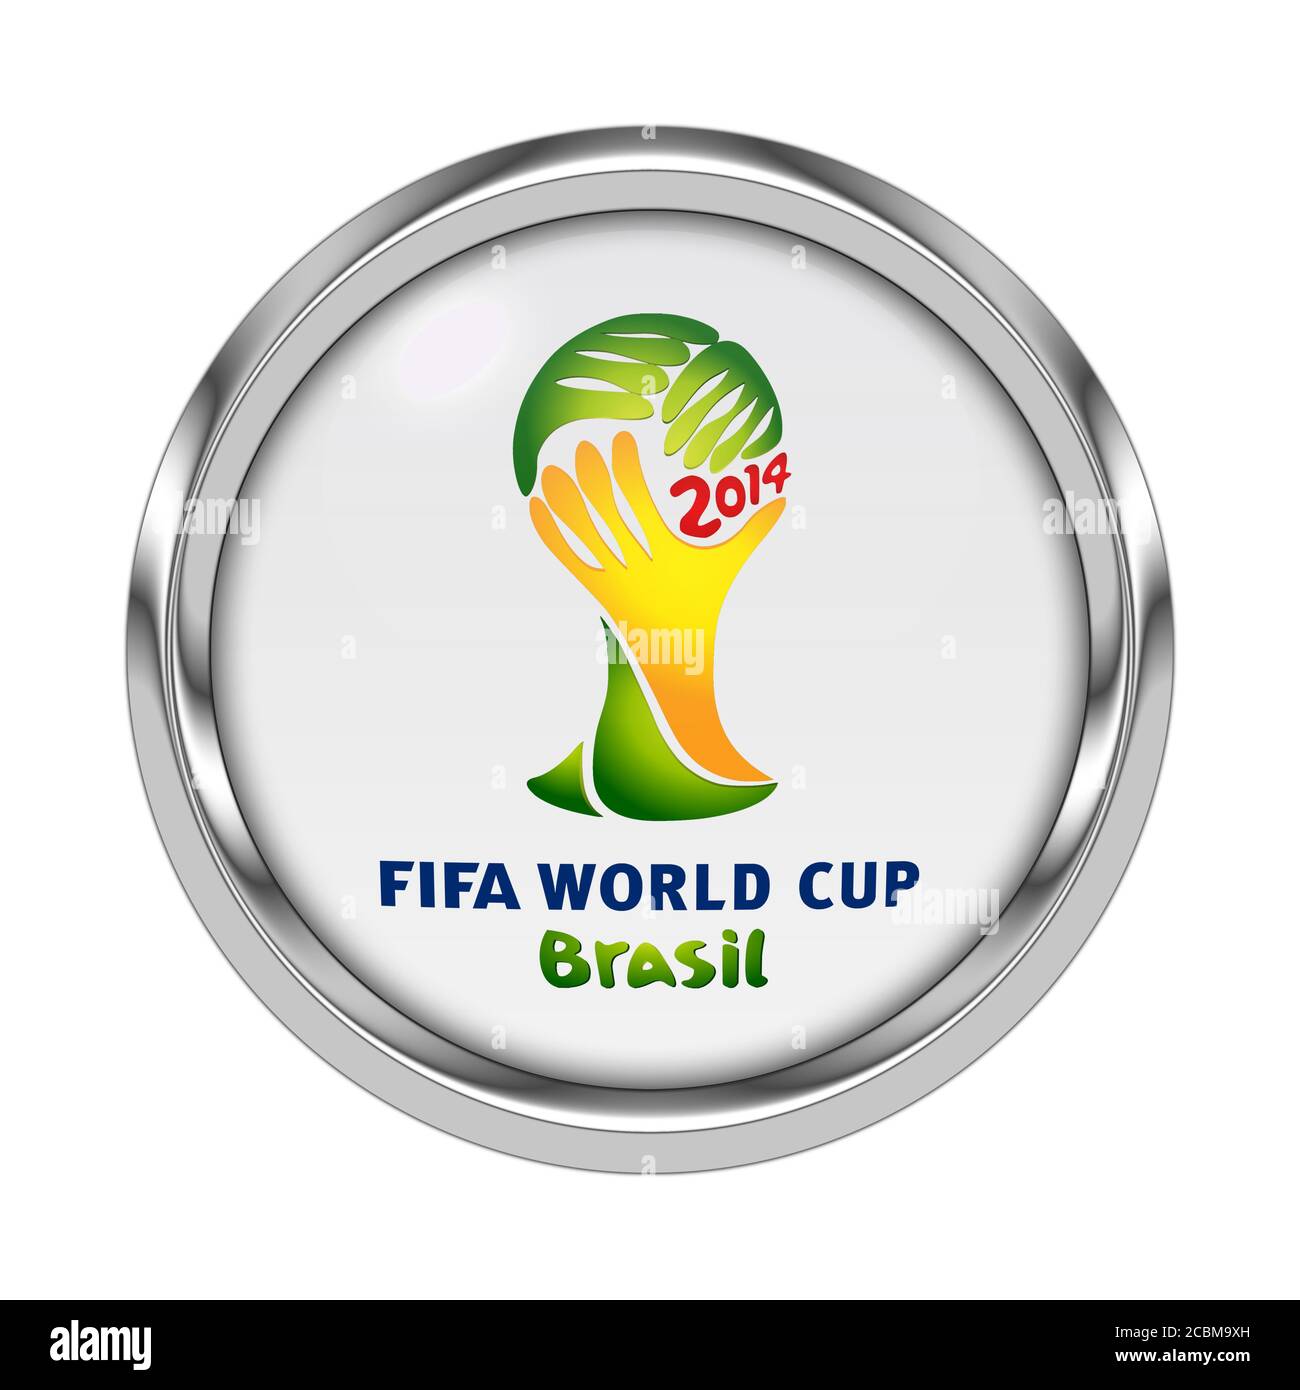 FIFA World Cup in Brasil Stock Photo